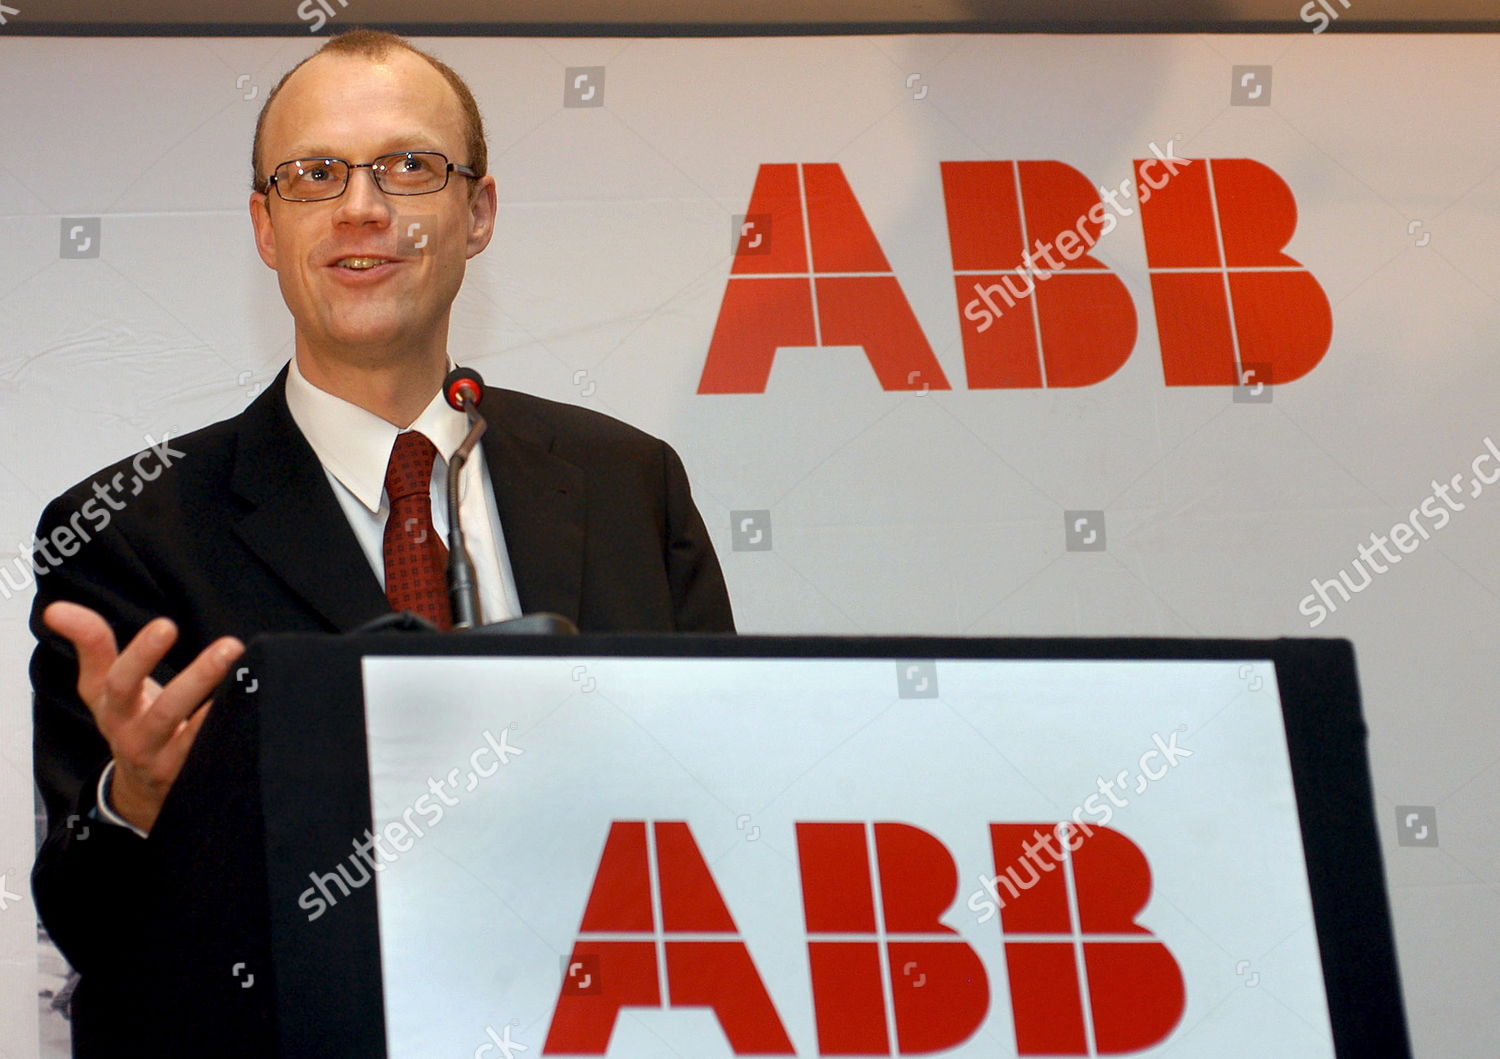 President Ceo Asea Brown Boveri Abb Editorial Stock Photo - Stock Image | Shutterstock